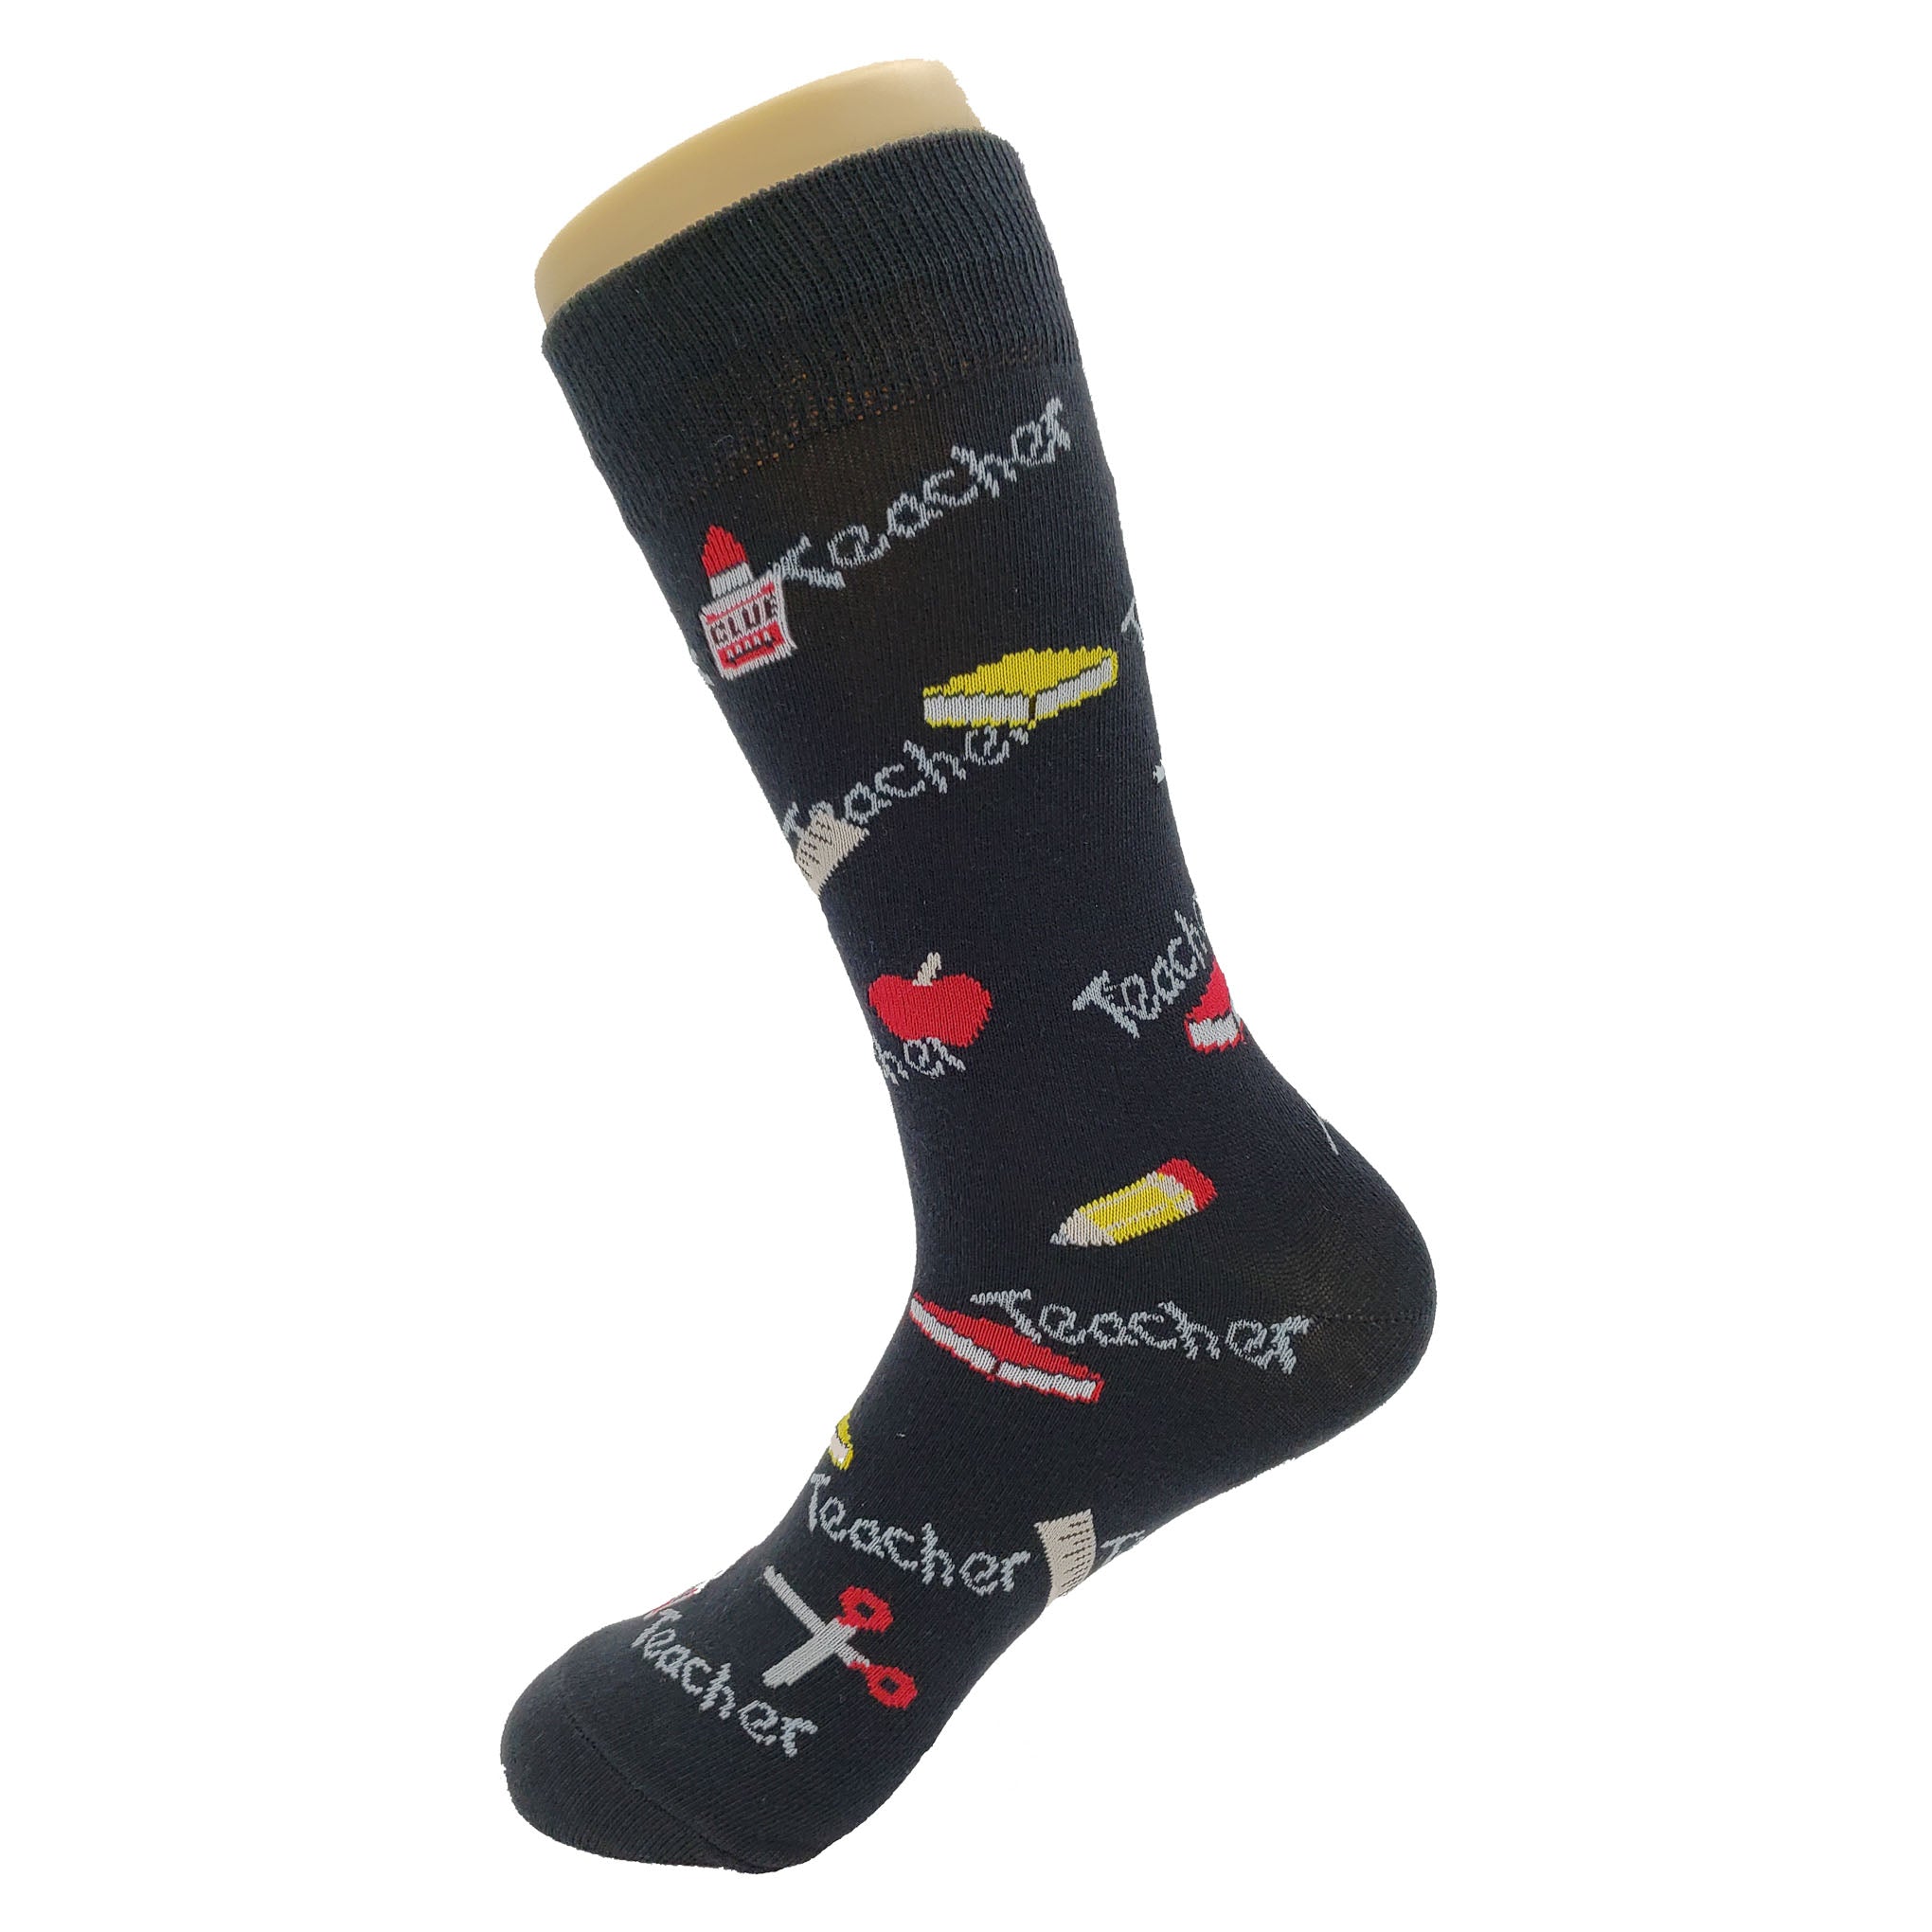 Teacher Socks - Fun and Crazy Socks at Sockfly.com